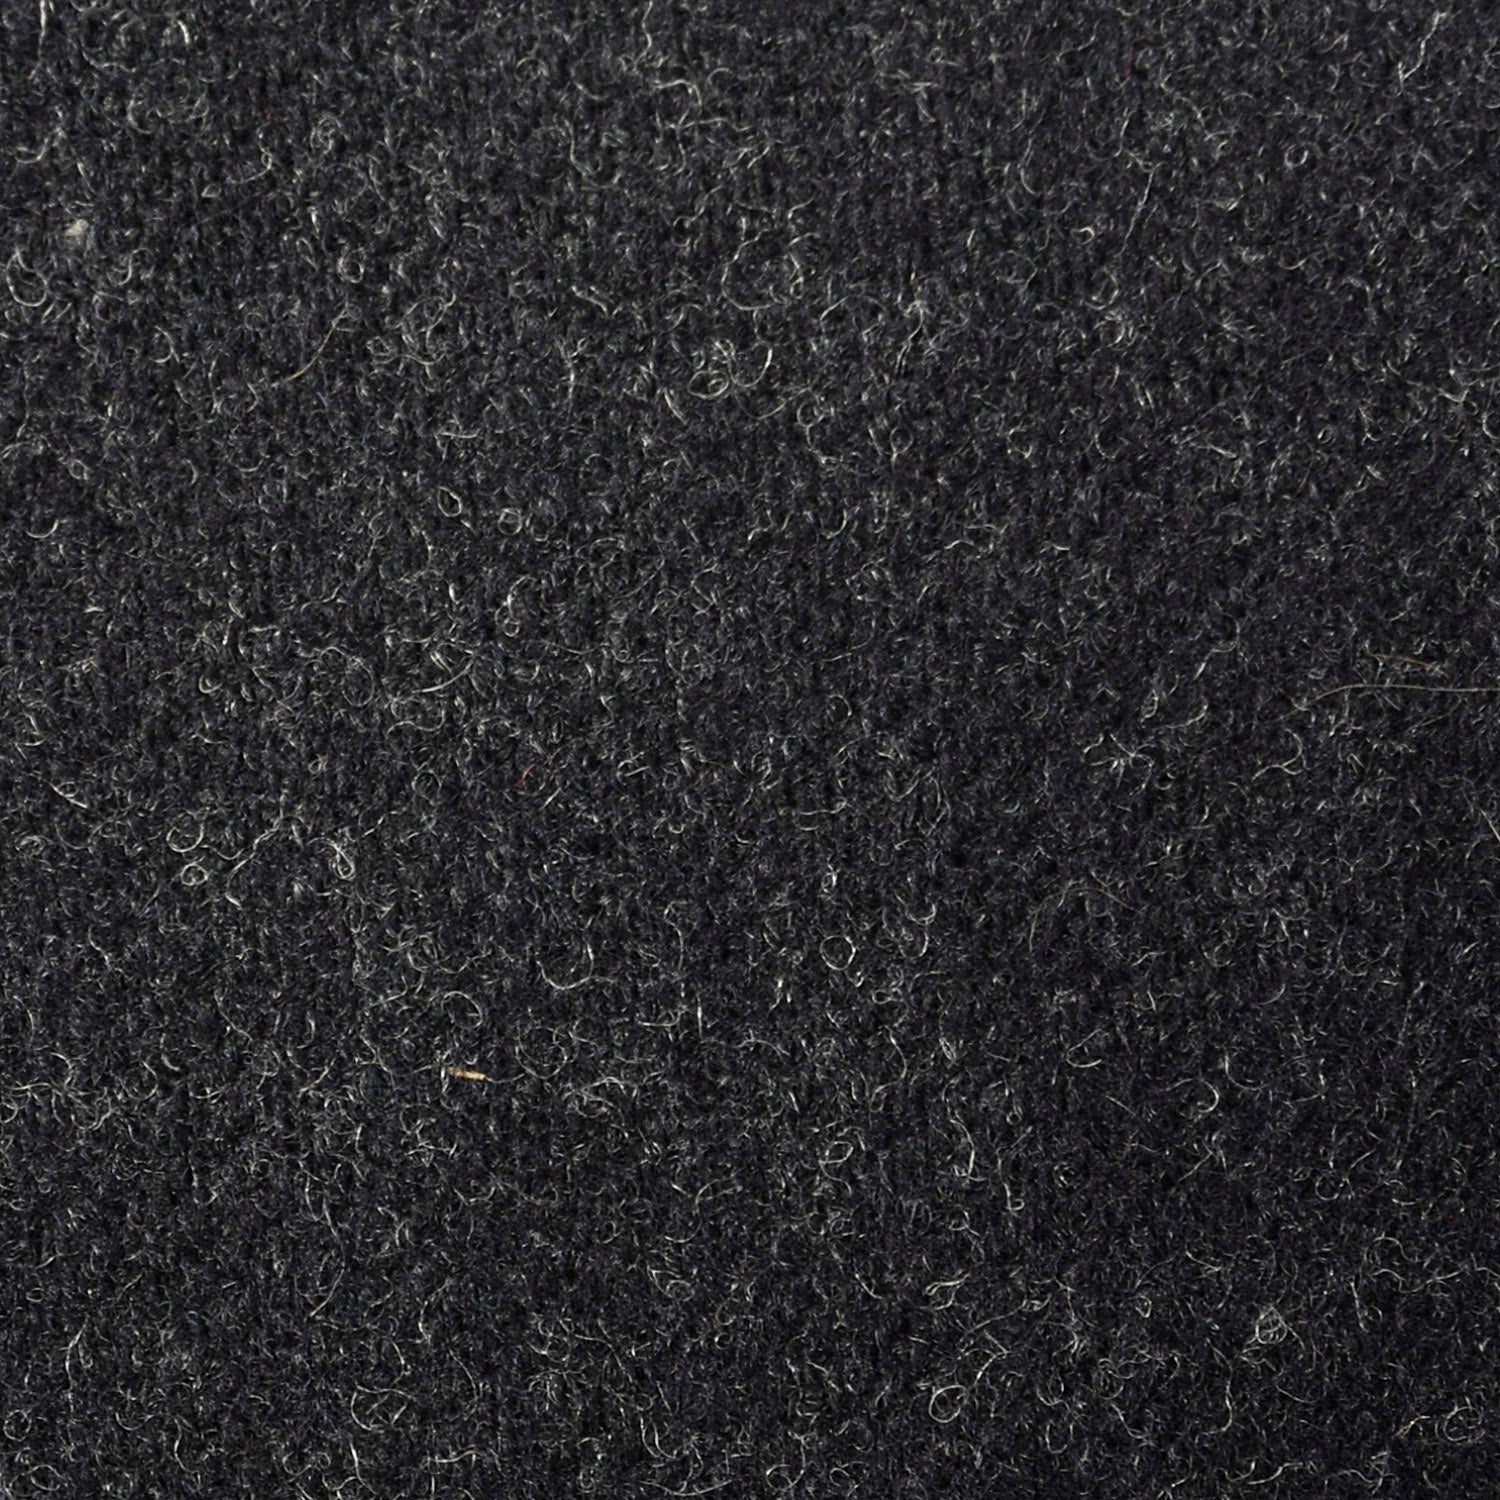 Small 1960s Mod Gray Wool Midi Skirt High Waist A Line Topstitch with Pockets